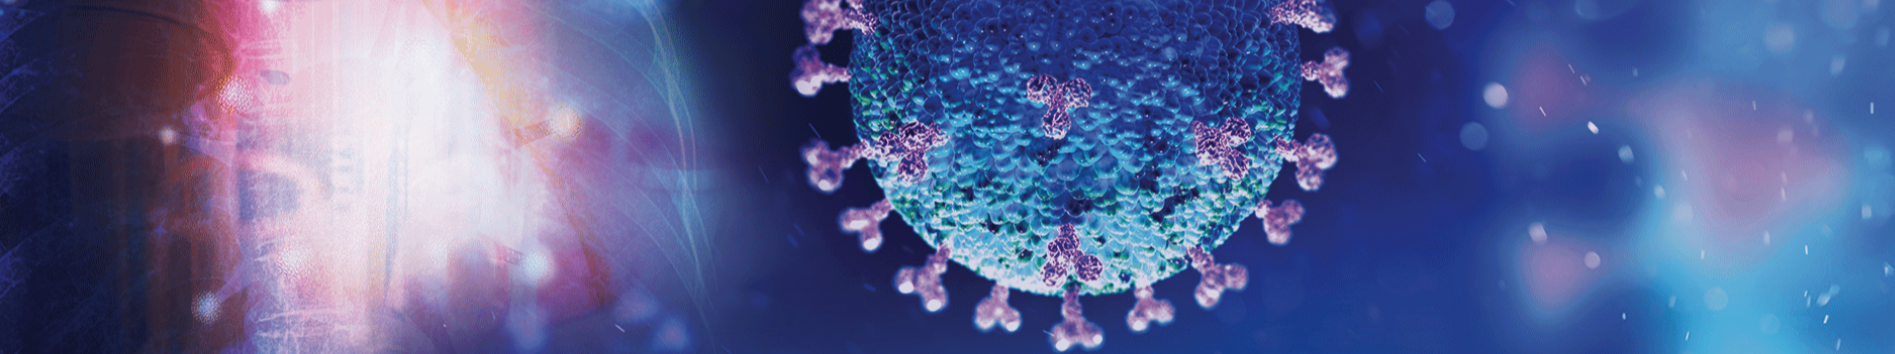 Illustration of coronavirus particle as seen under a microscope.